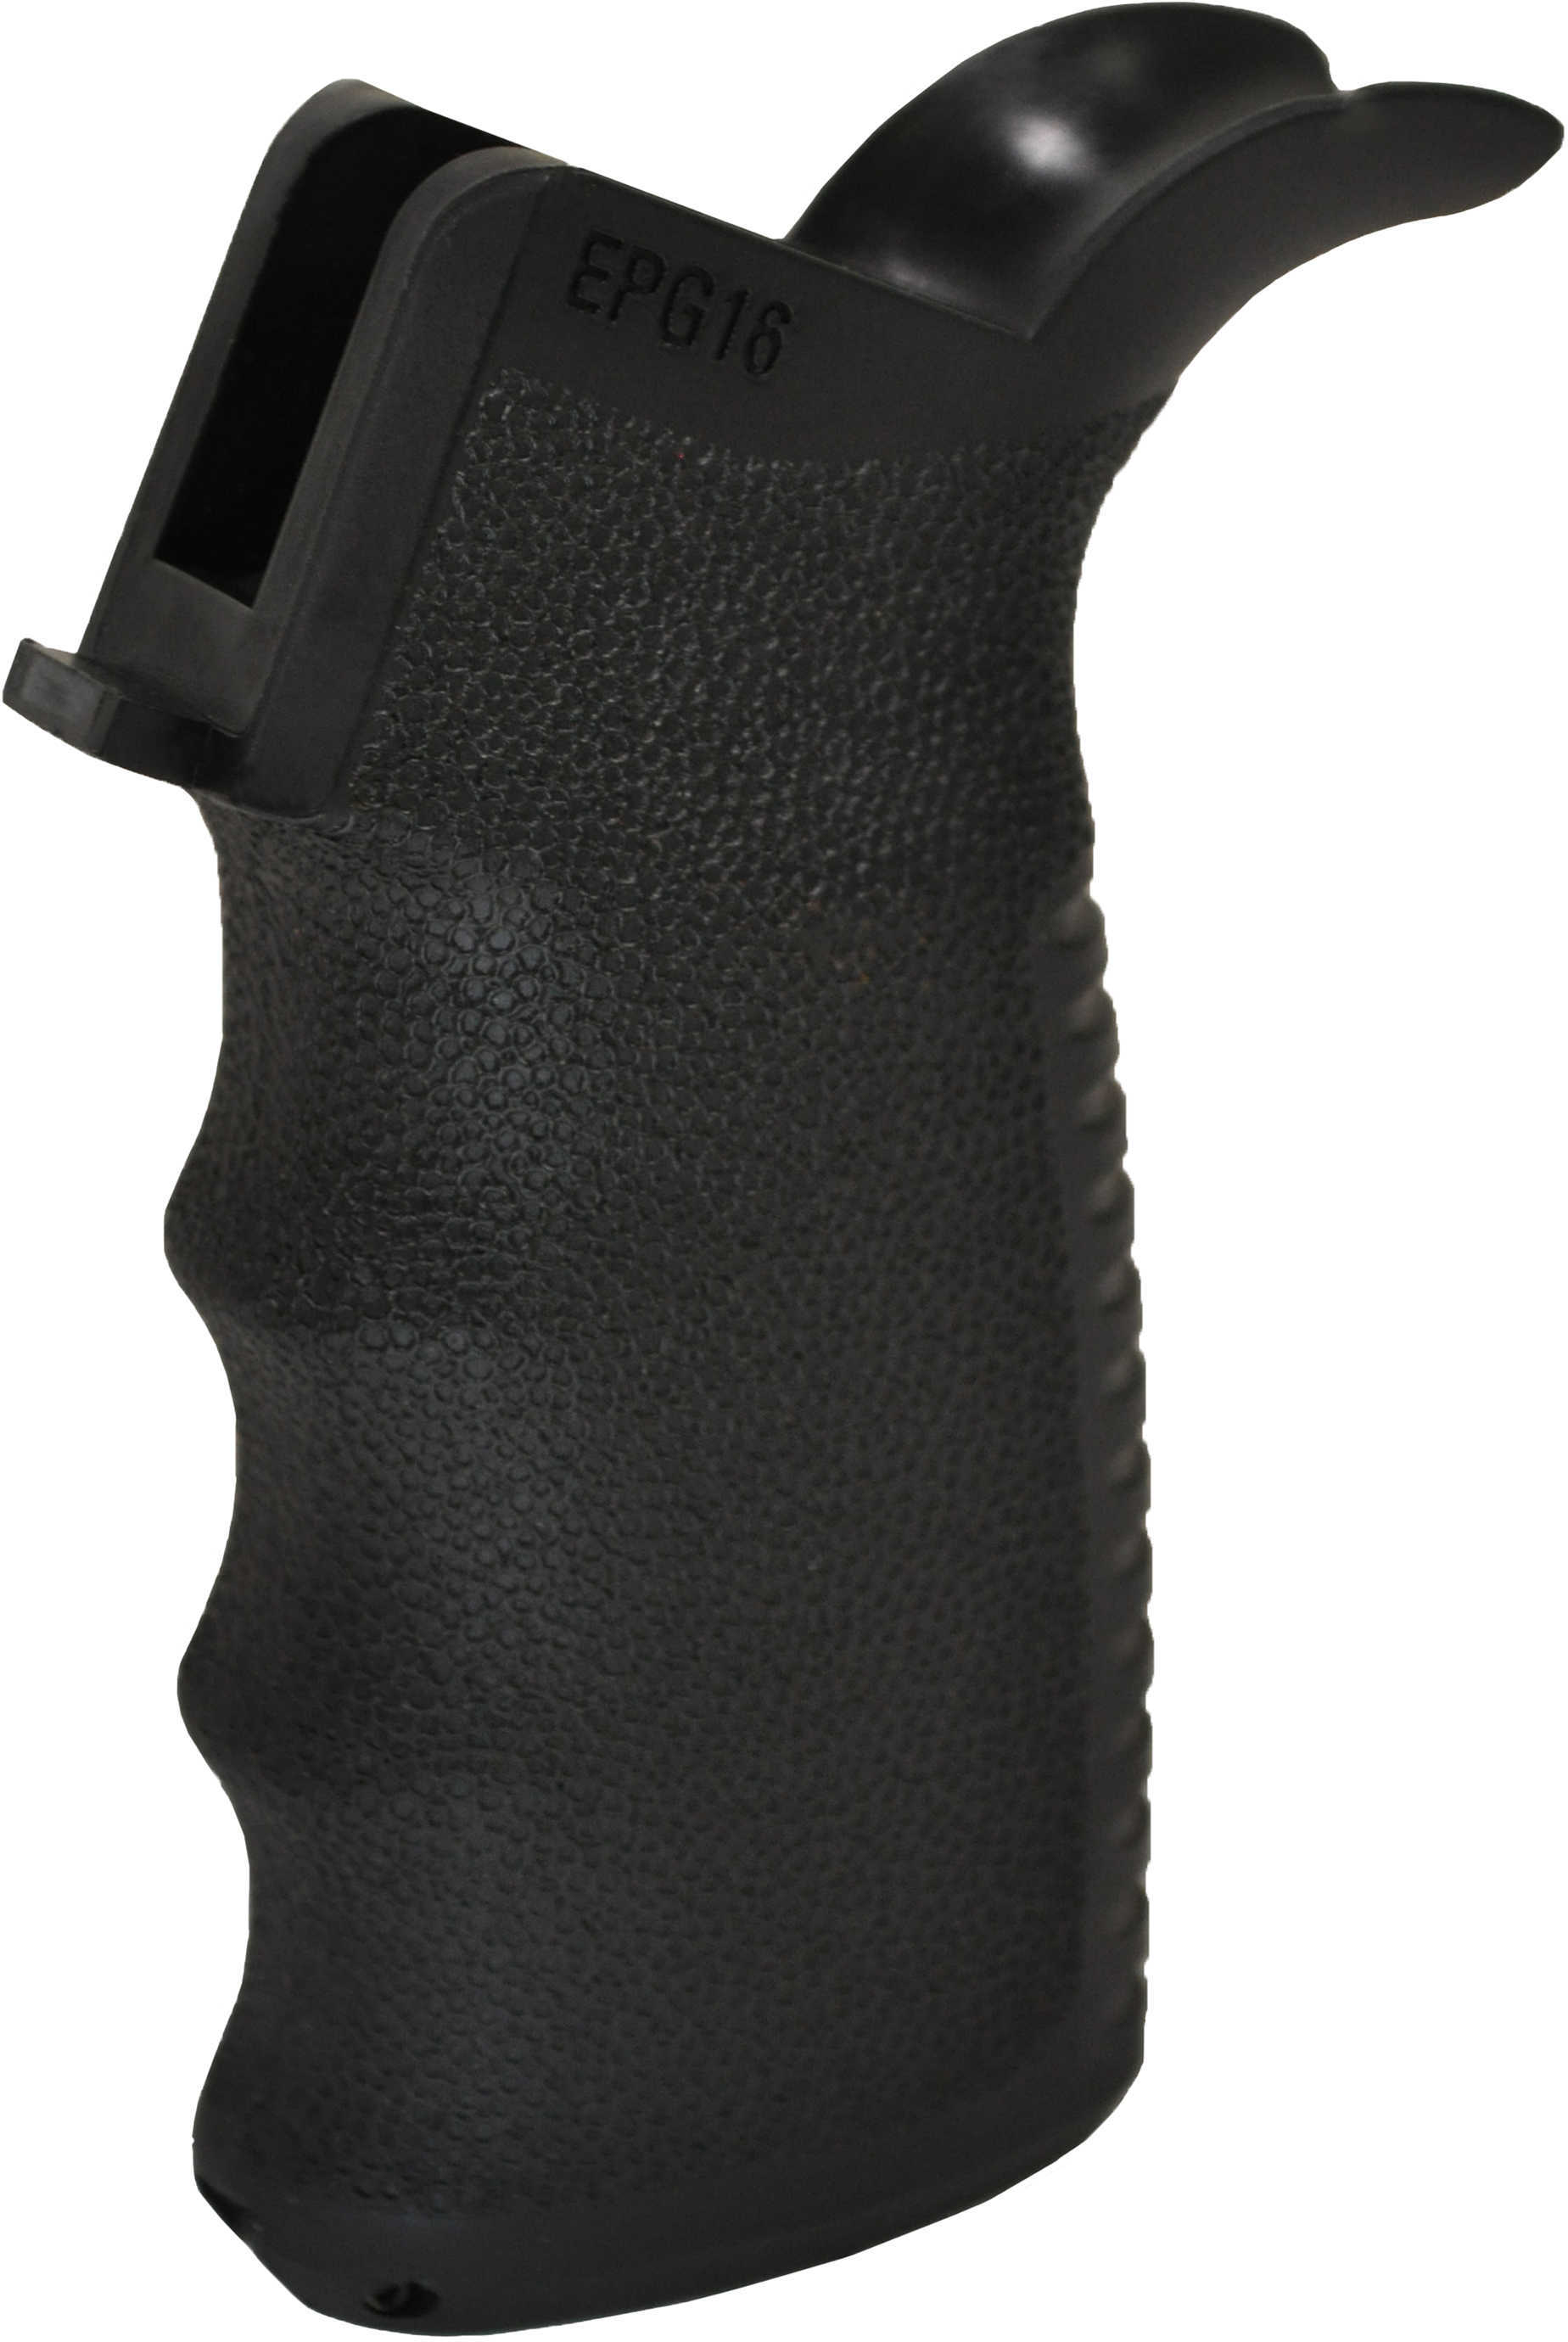 Bushmaster 93392 Enhanced Pistol Grip AR-15 Textured Black Polymer